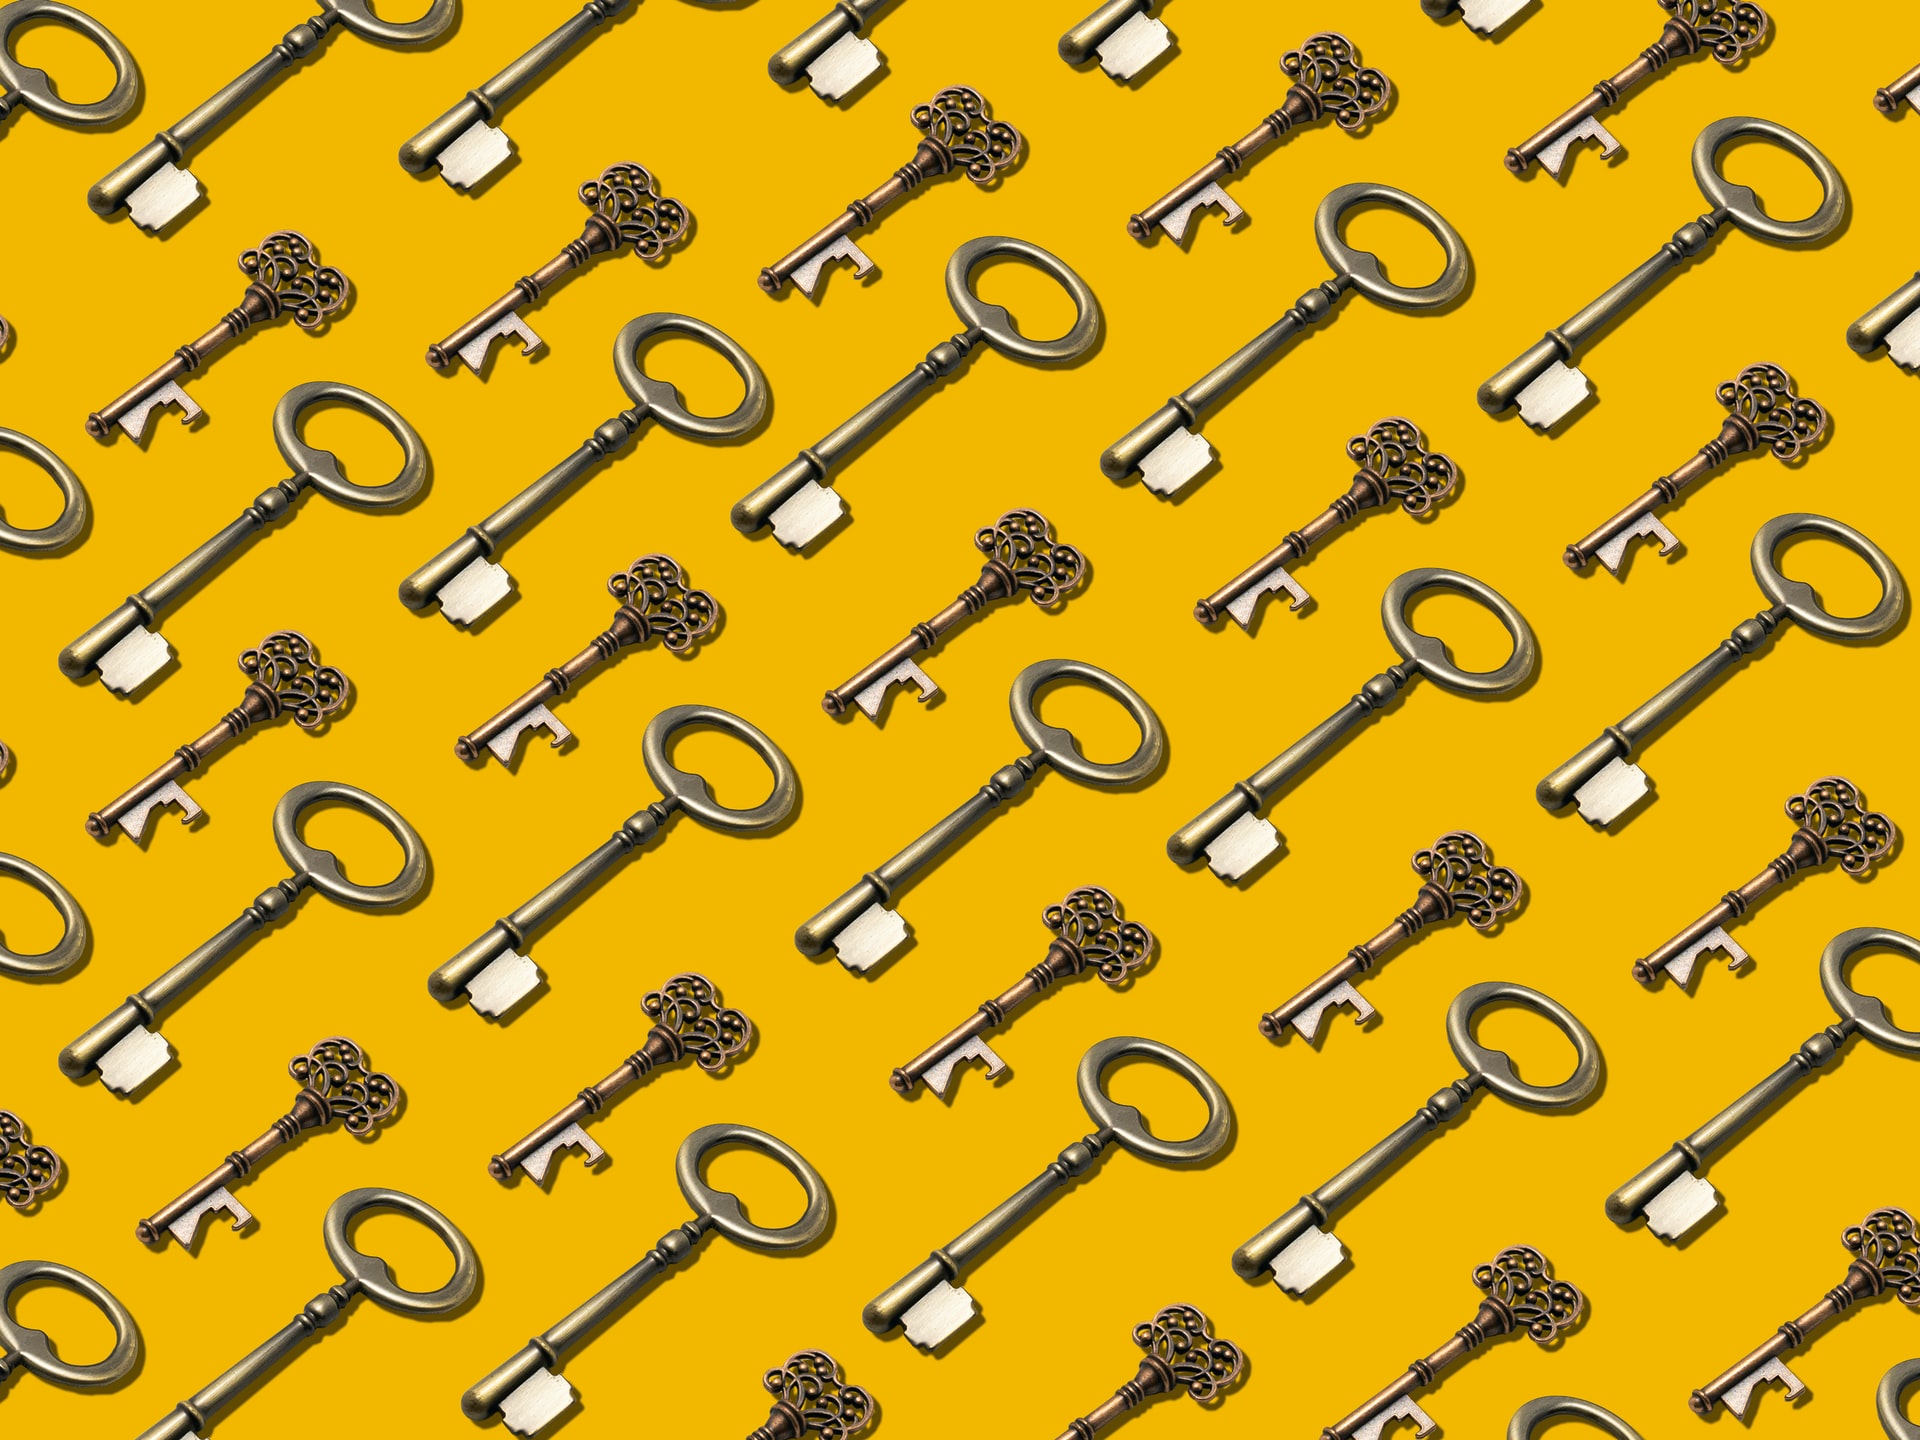 Keys on yellow background